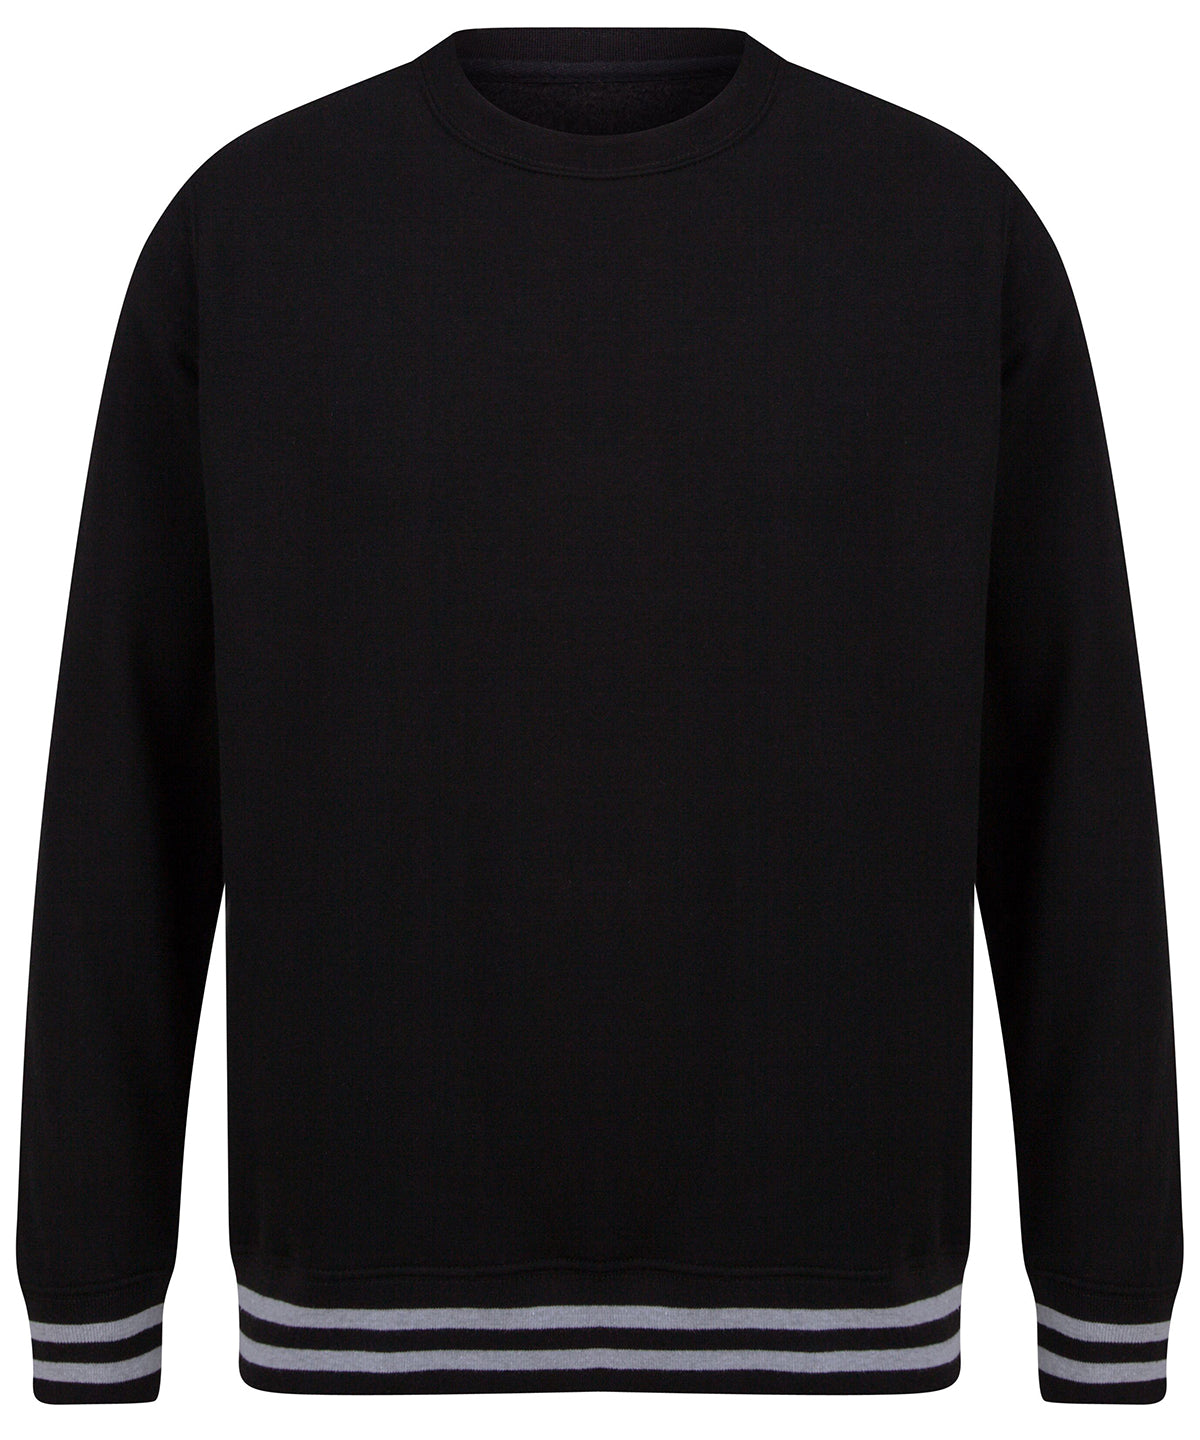 Personalised Sweatshirts - Black Front Row Sweatshirt with striped cuffs